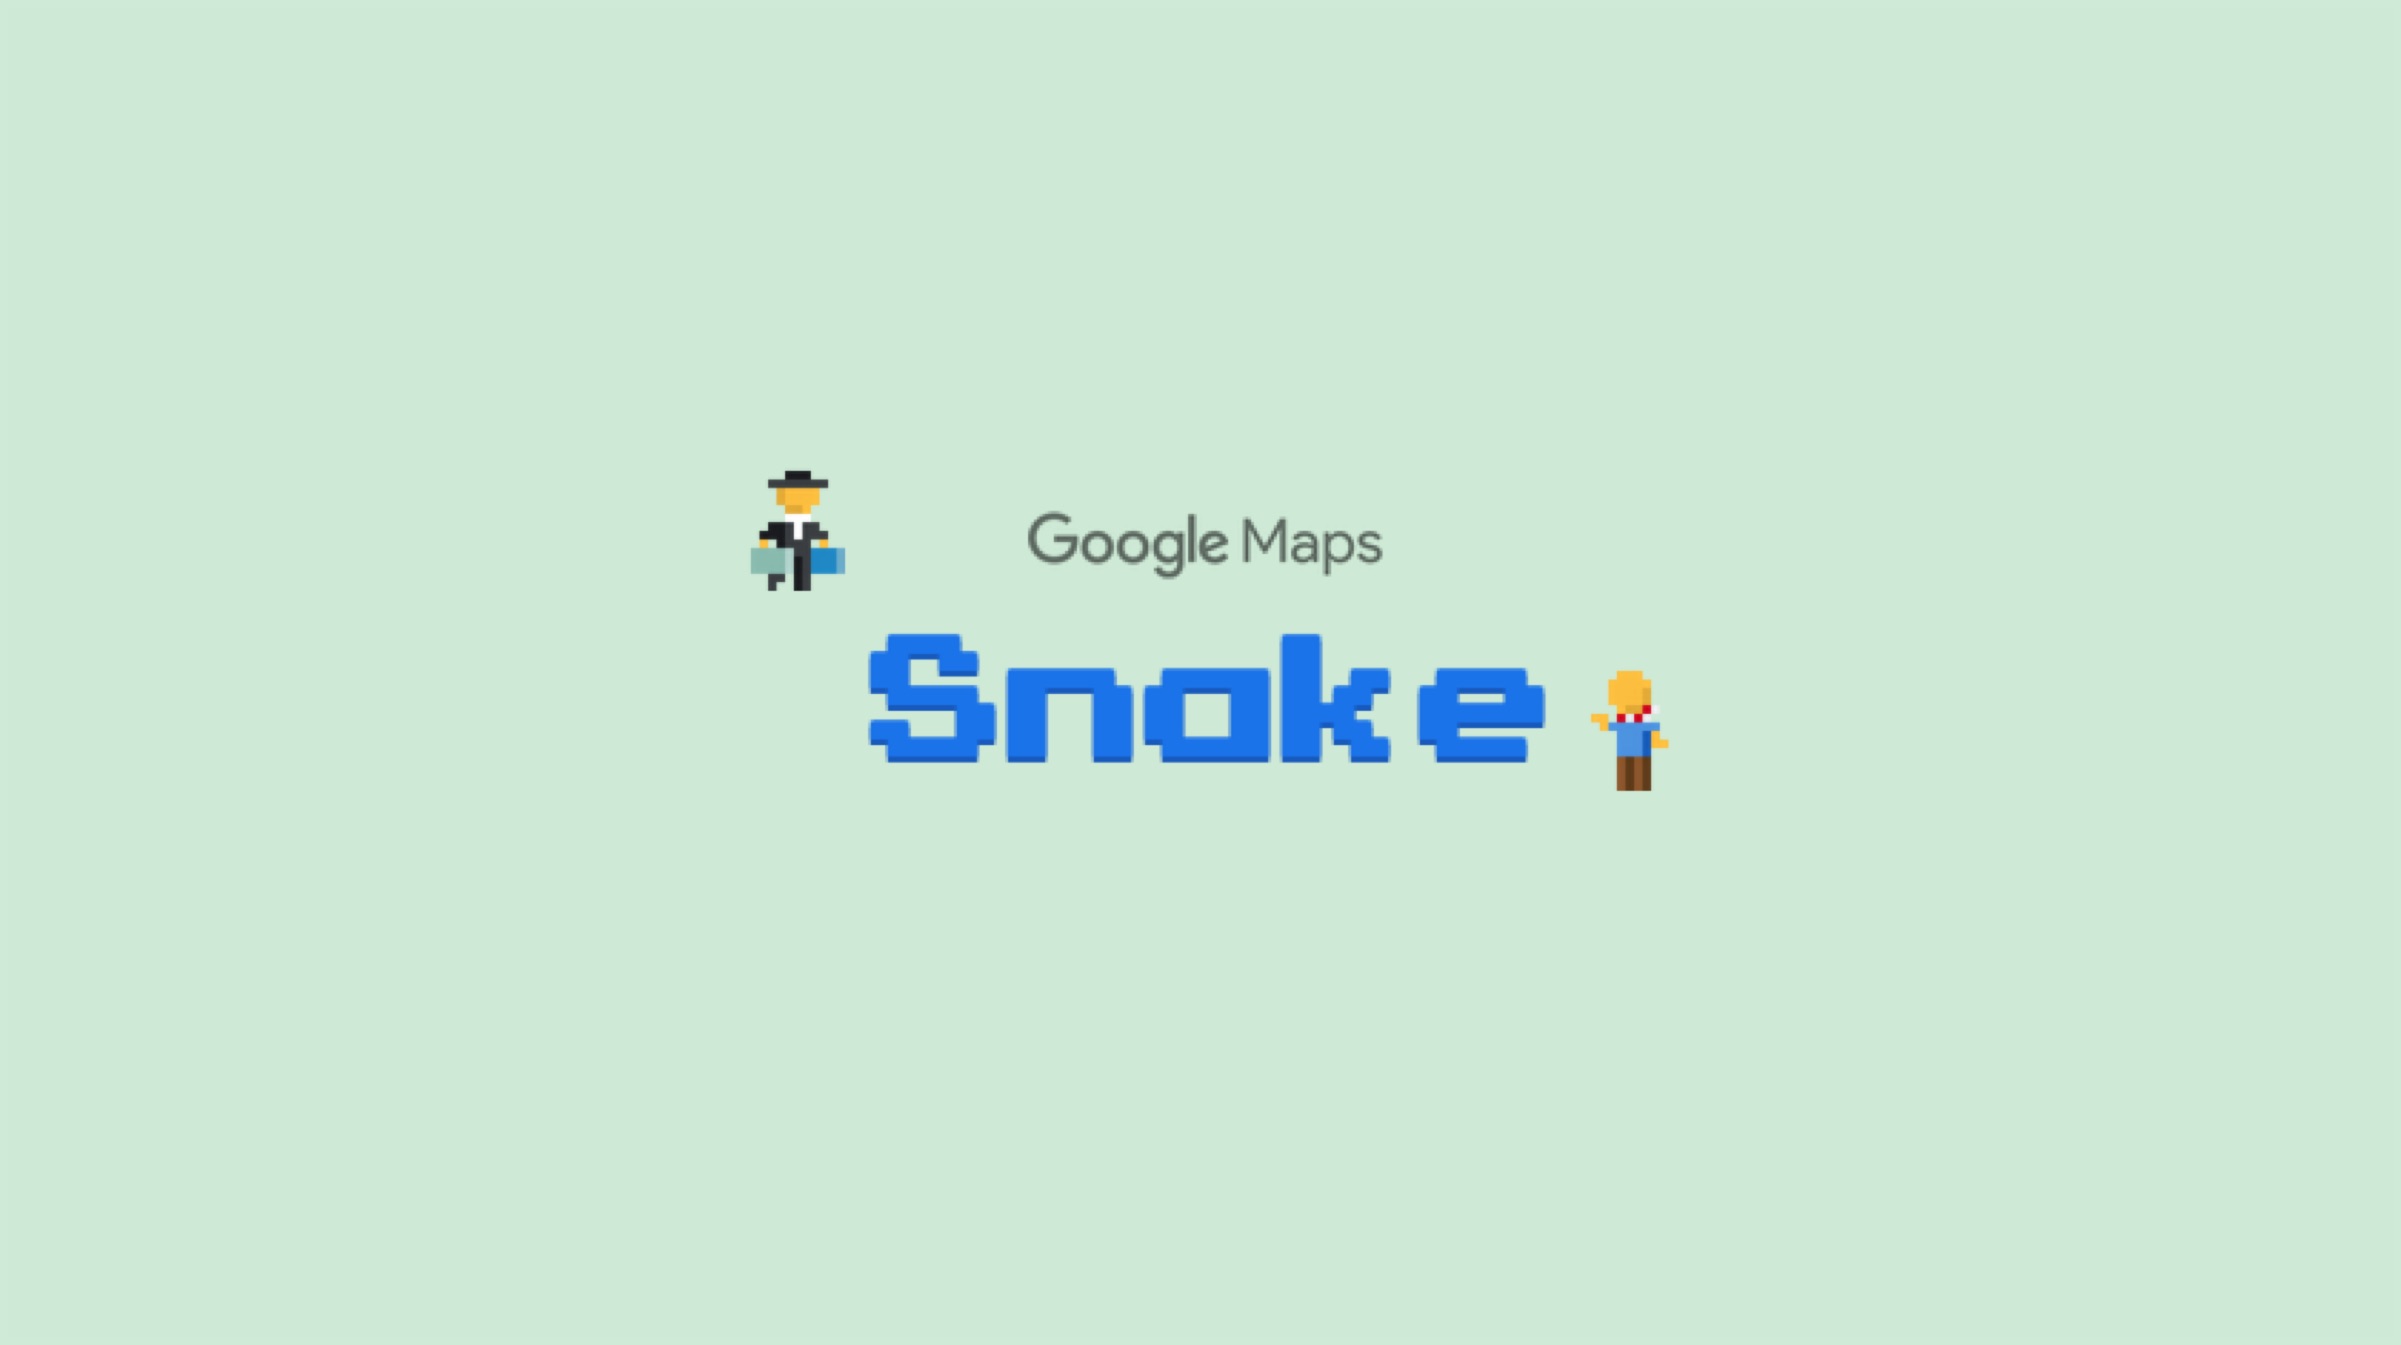 Snake Game Evo - Apps on Google Play